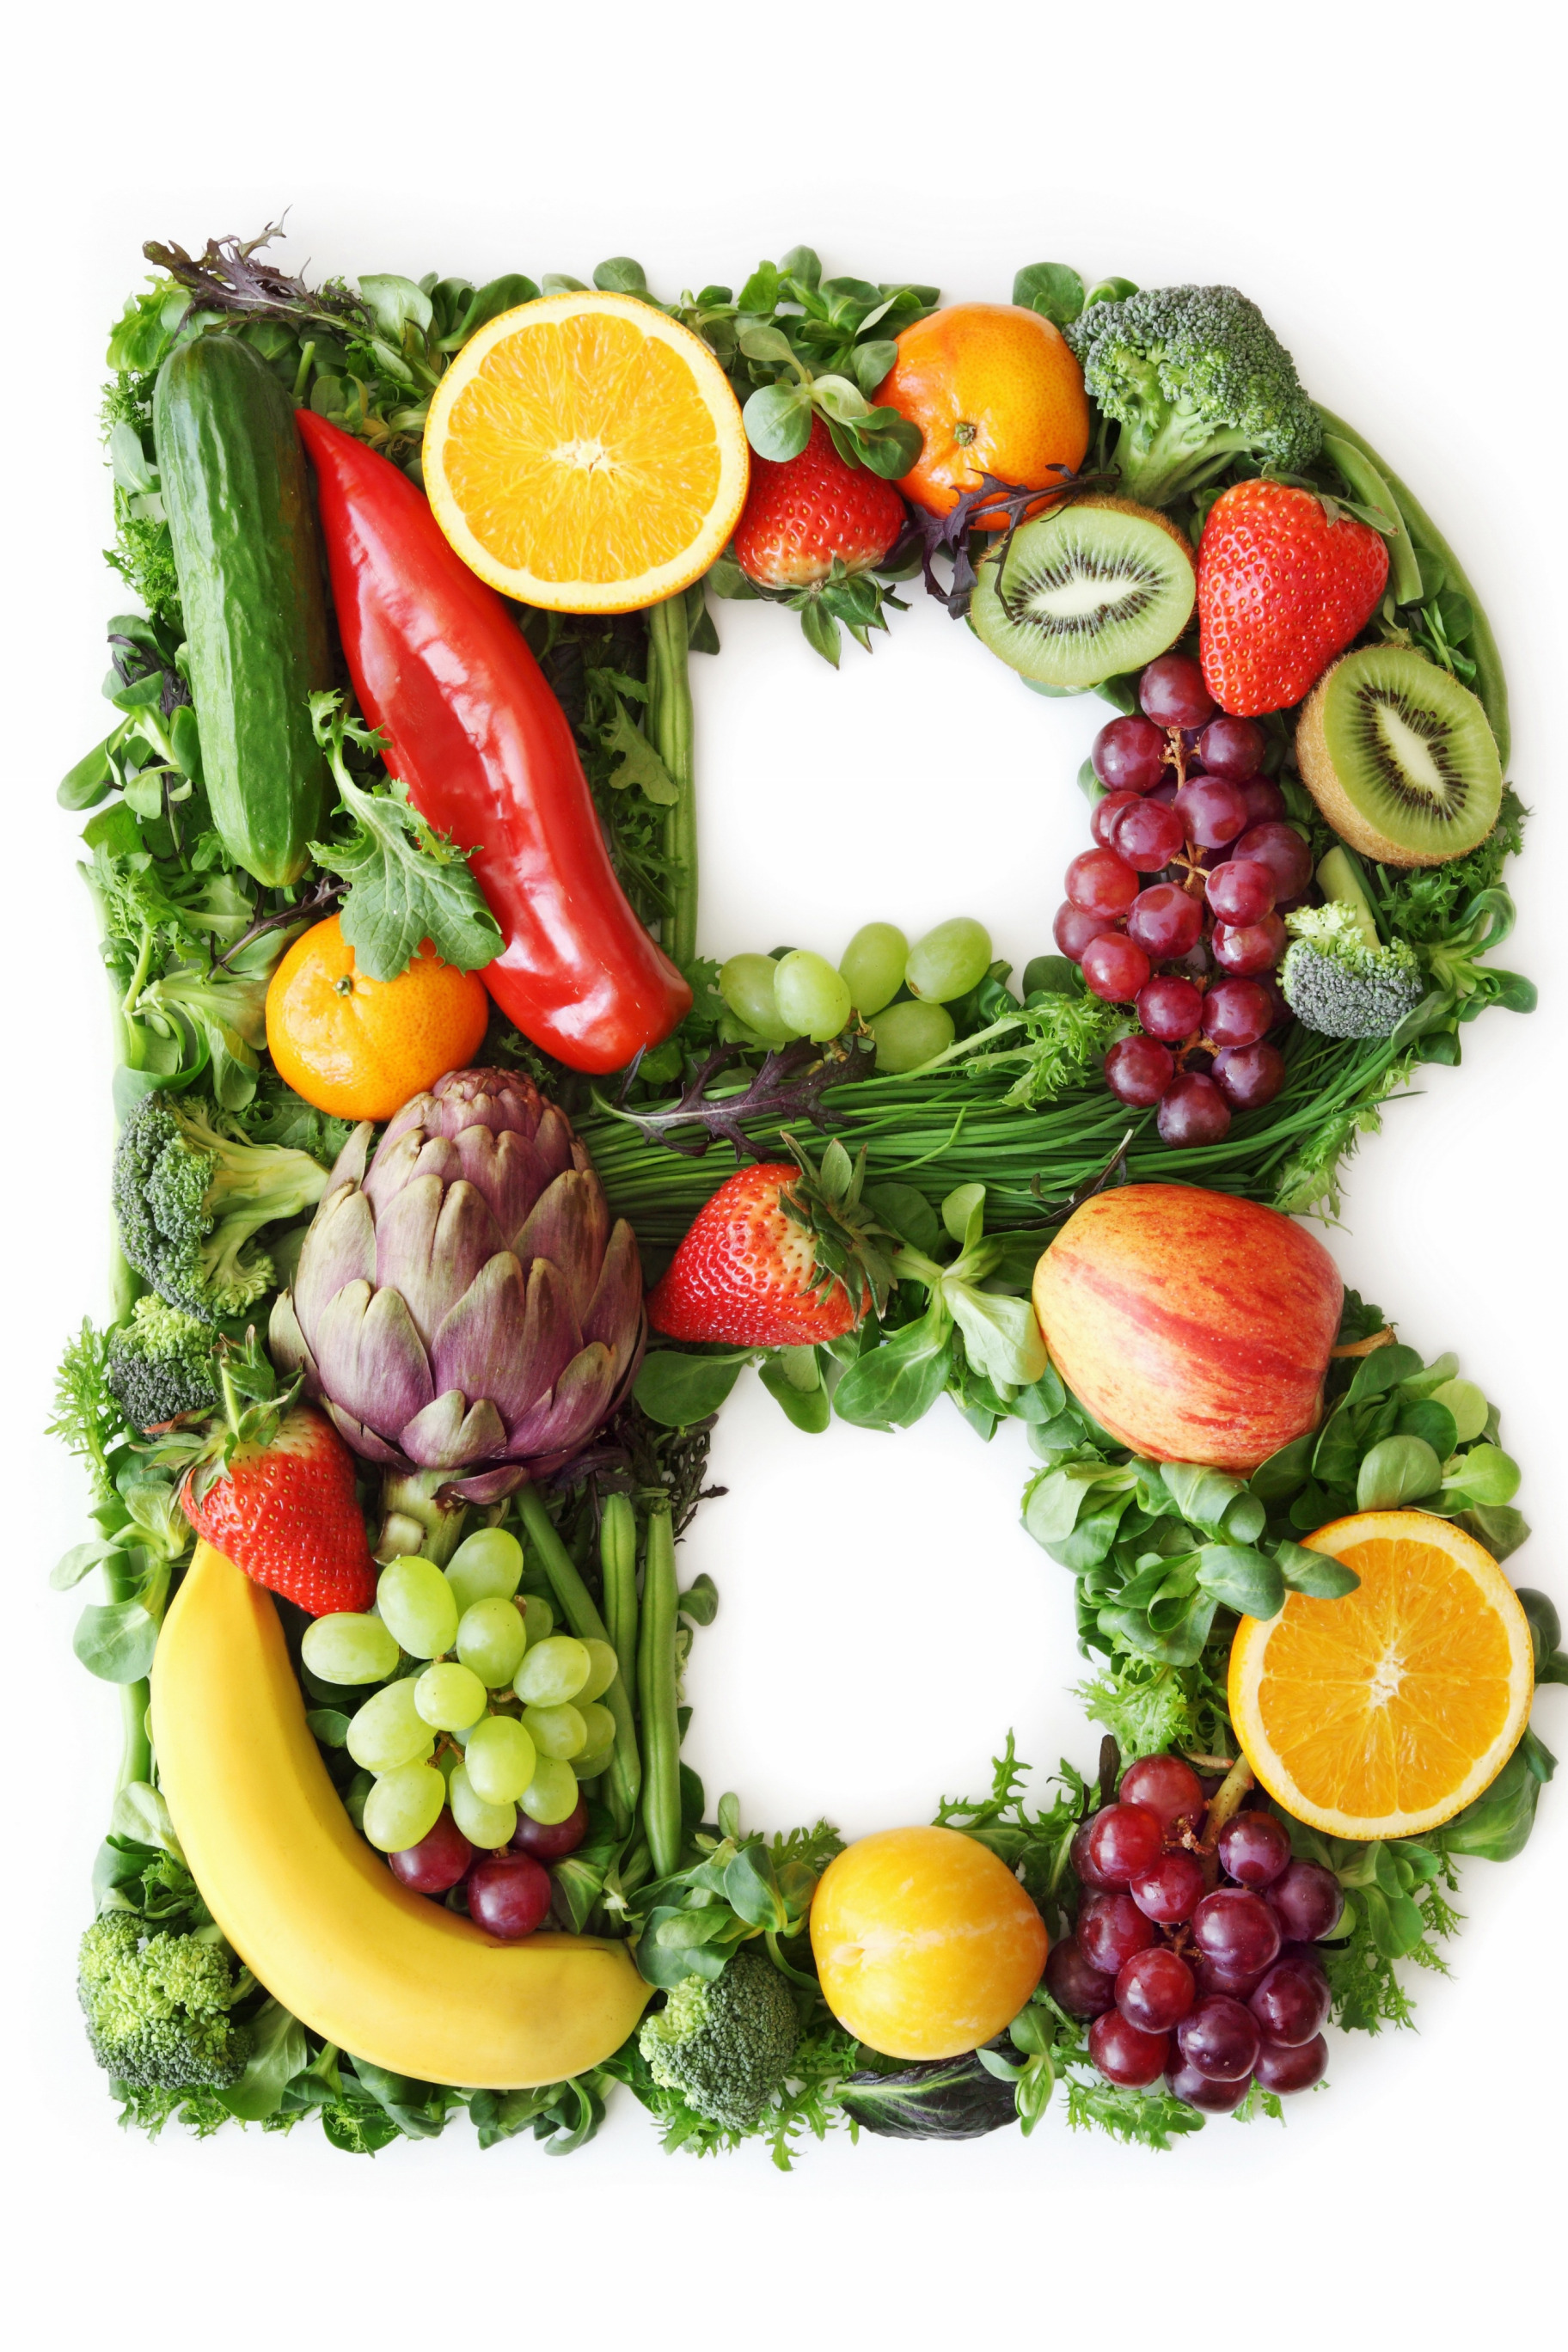 Овощи витамин b. Витамины. Буквы из овощей и фруктов. Витамины фруктов и овощей. Витамины в фруктах.